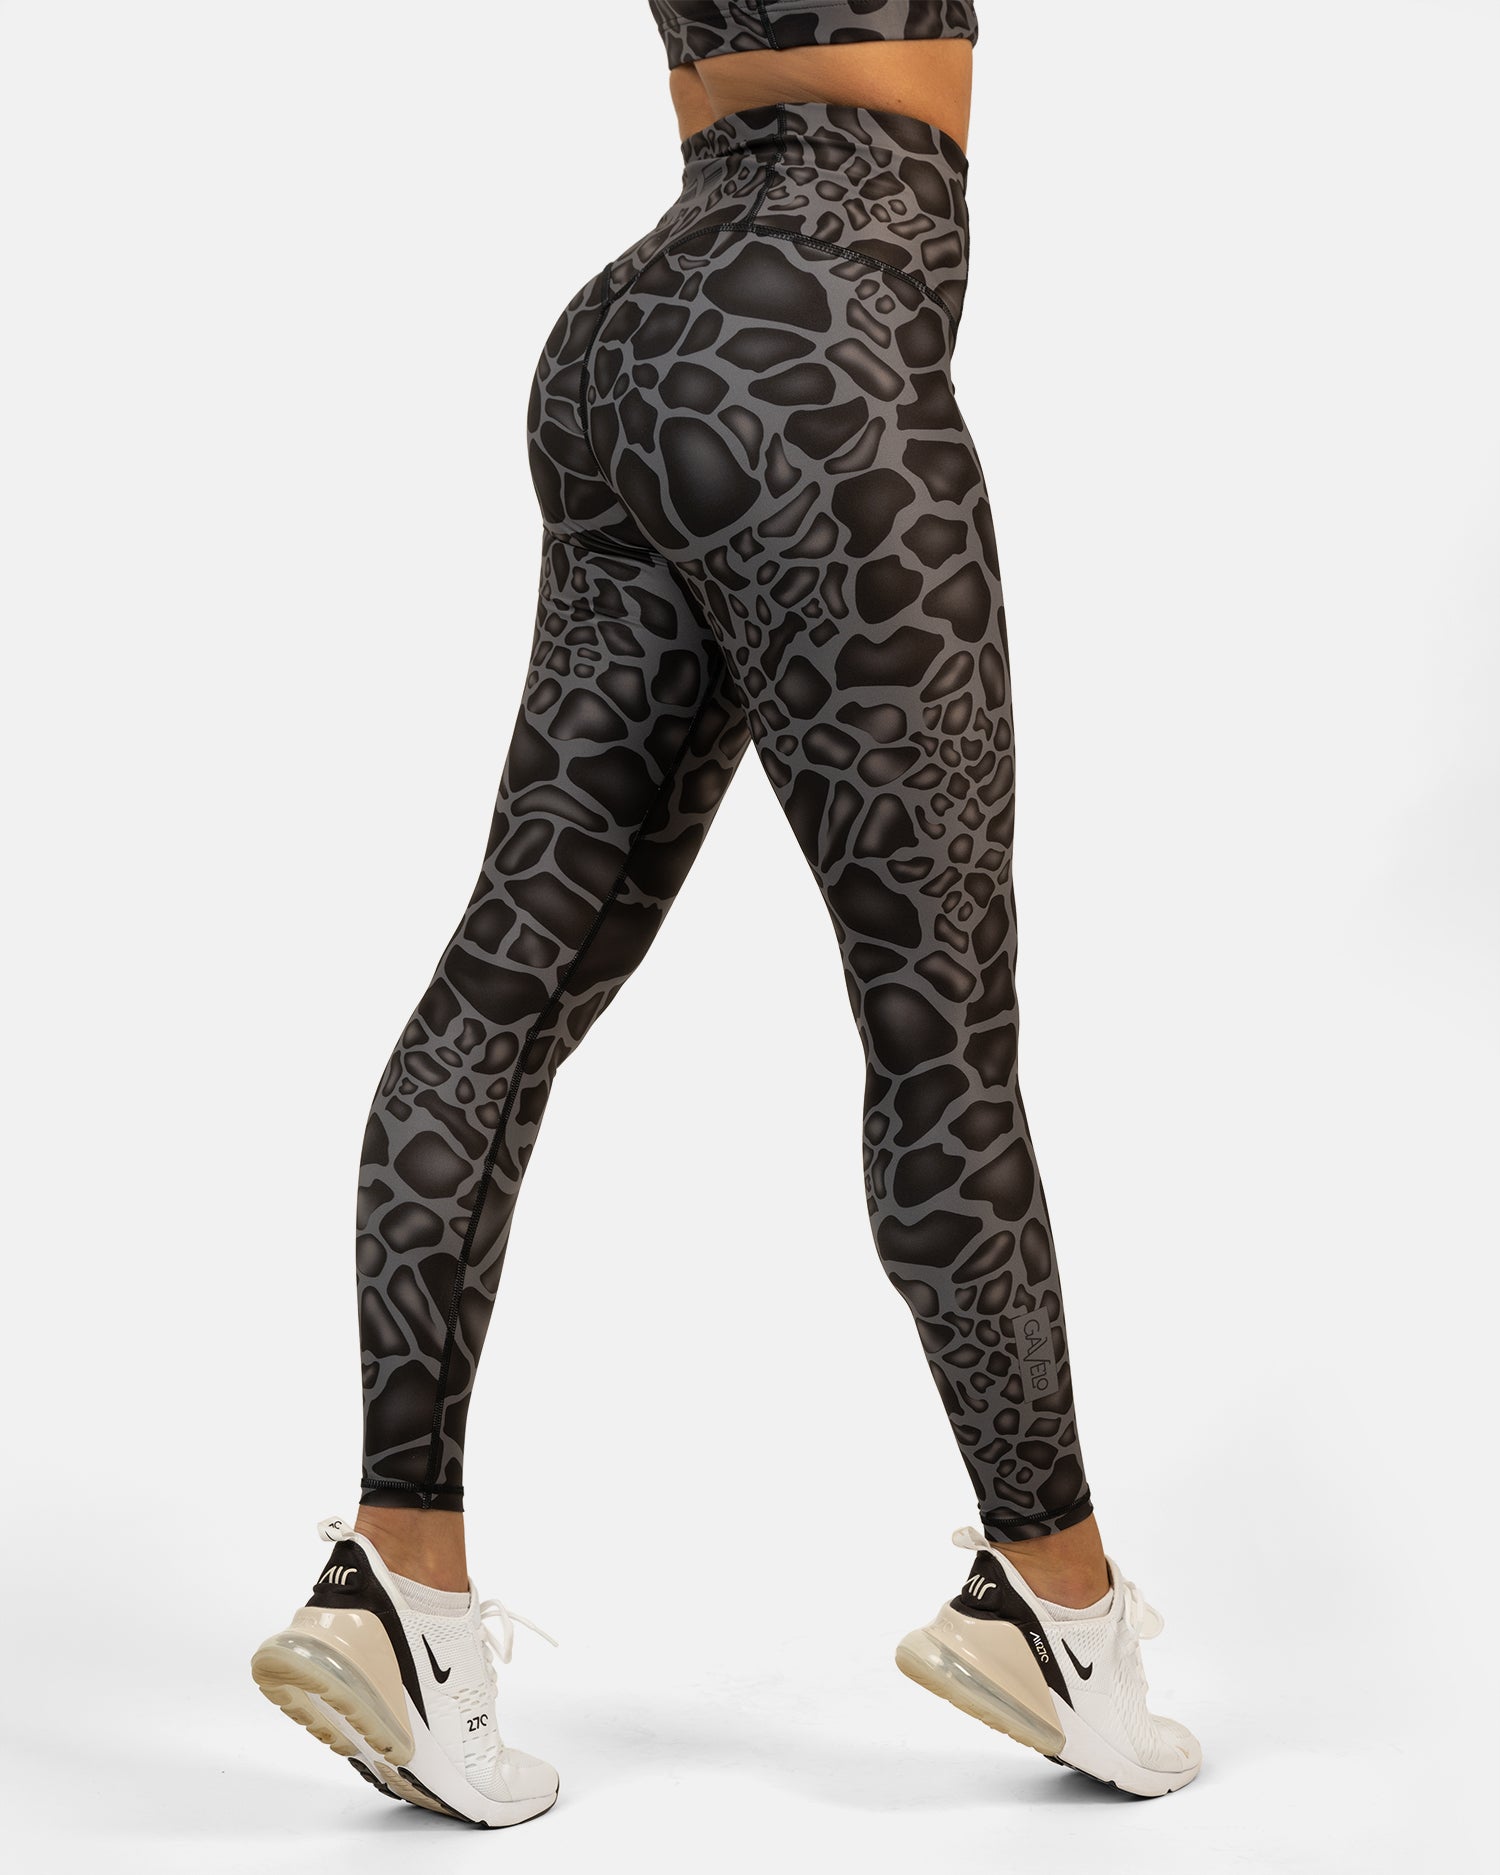 GAVELO Giraffe Black Compression tights